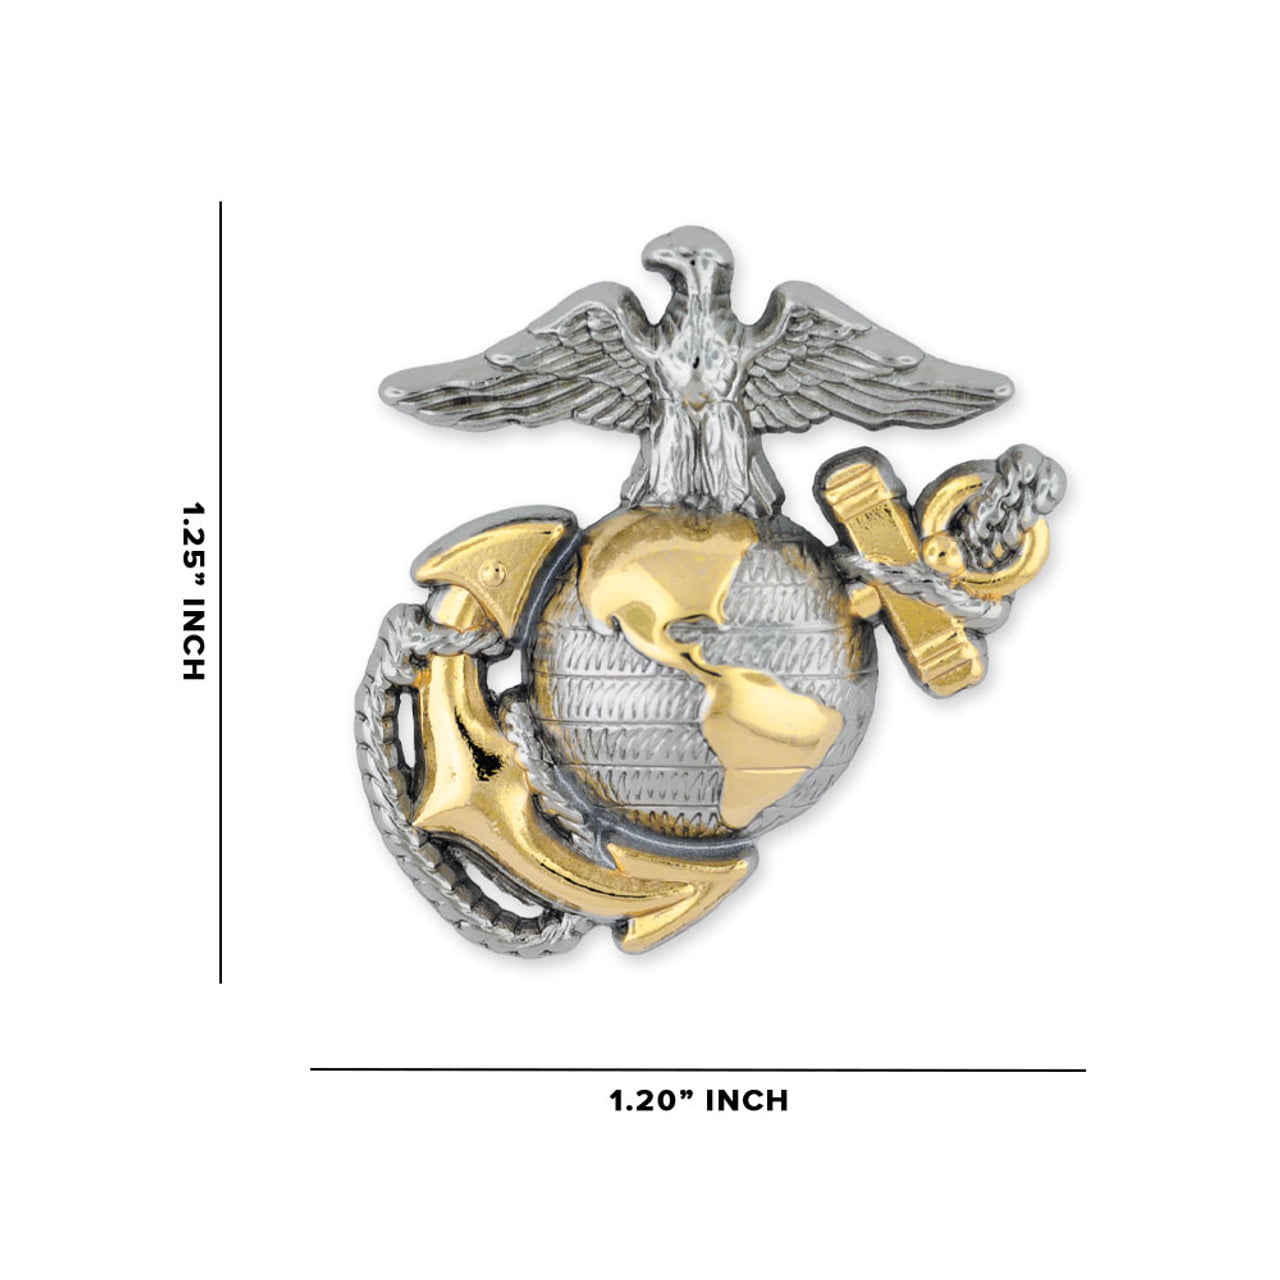 USMC Eagle, Globe and Anchor Kilt Pin